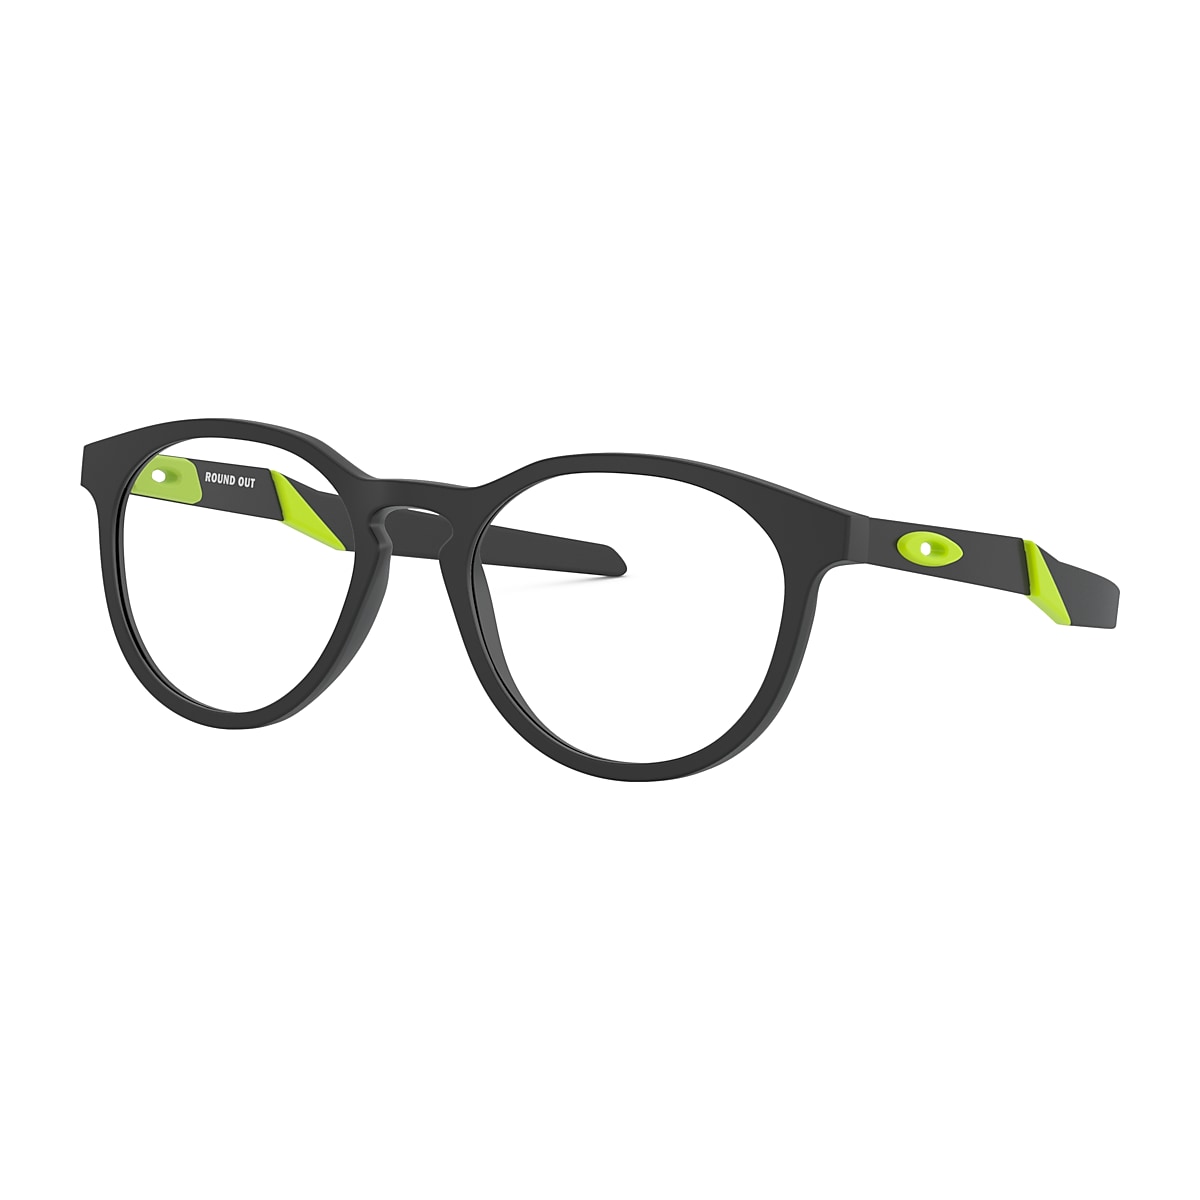 Round Out (Youth Fit) Satin Black Eyeglasses | Oakley® SE